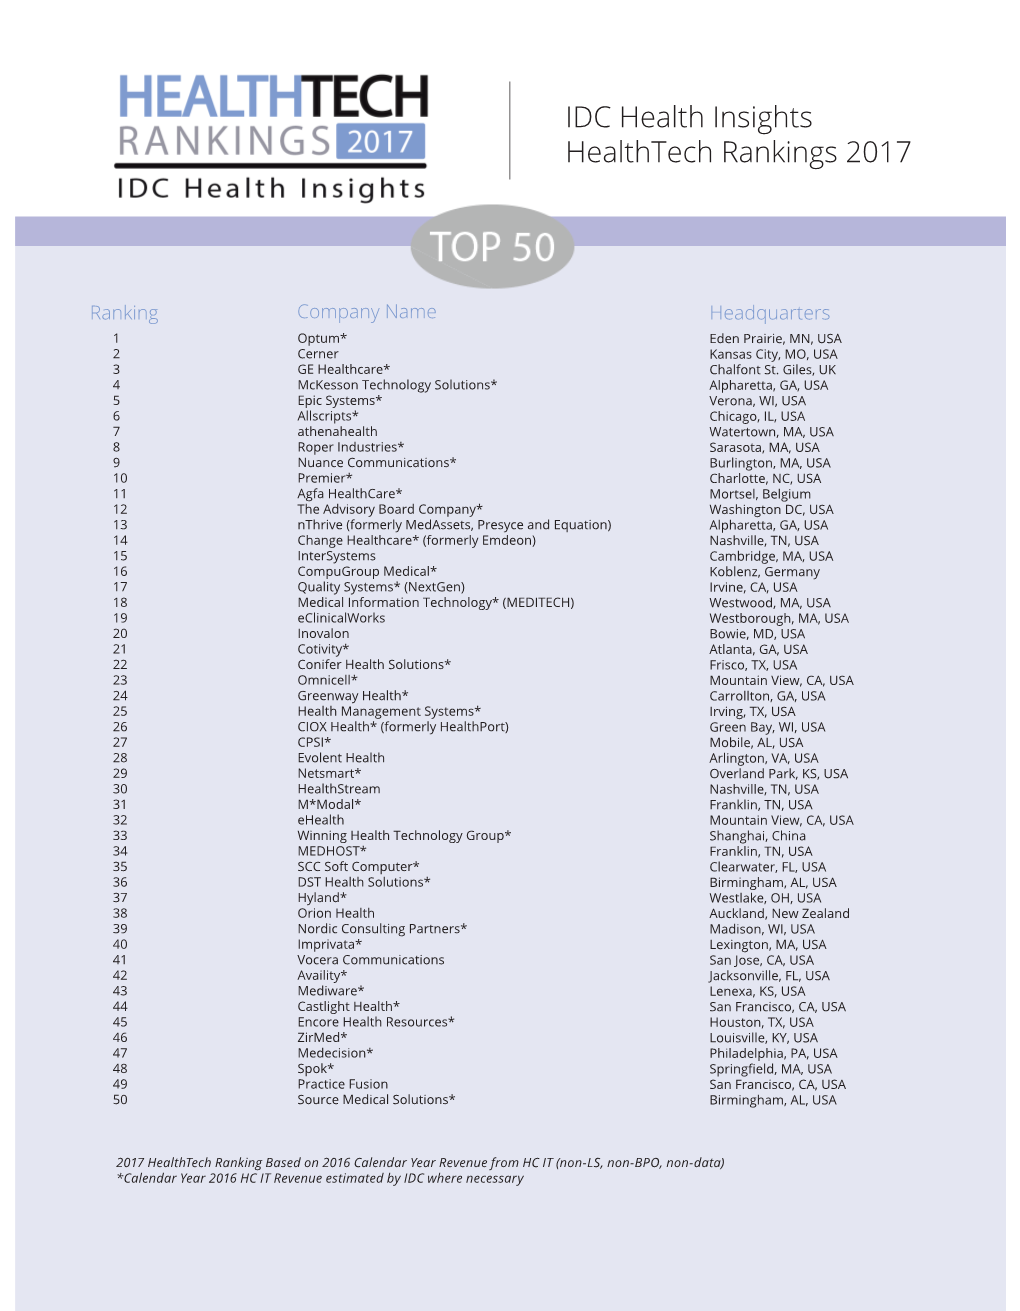 IDC Health Insights Healthtech Rankings 2017